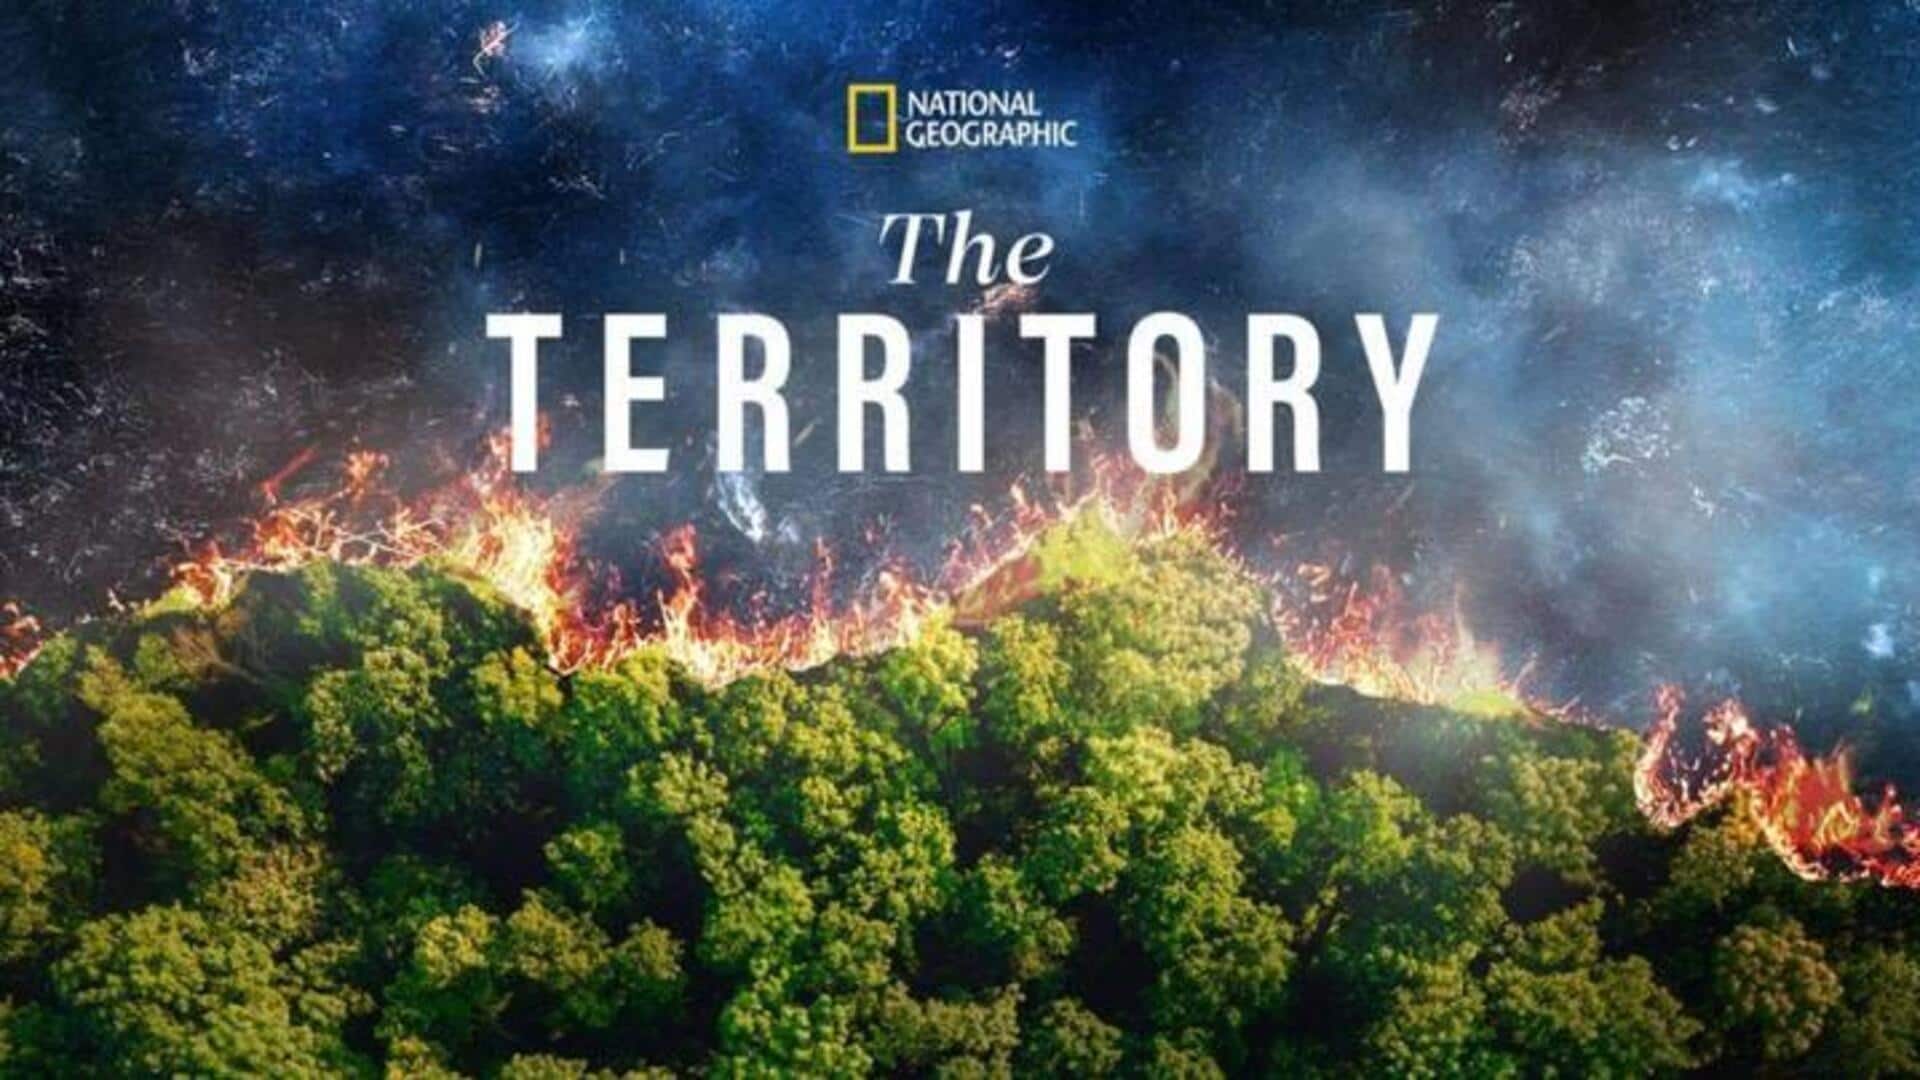 Film Dokumenter Pemenang Emmy 'The Territory' Karya National Geographic